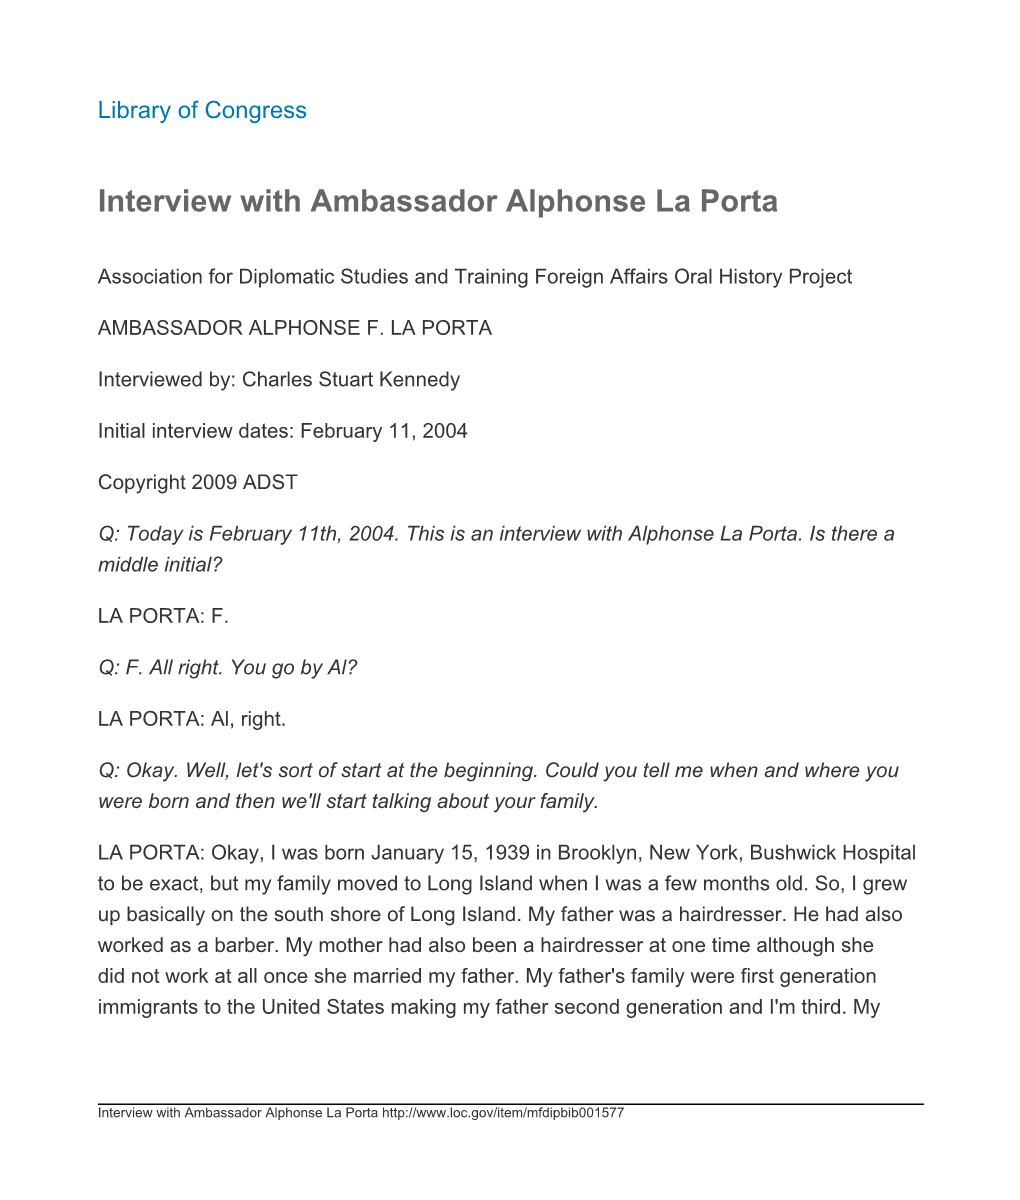 Interview with Ambassador Alphonse La Porta